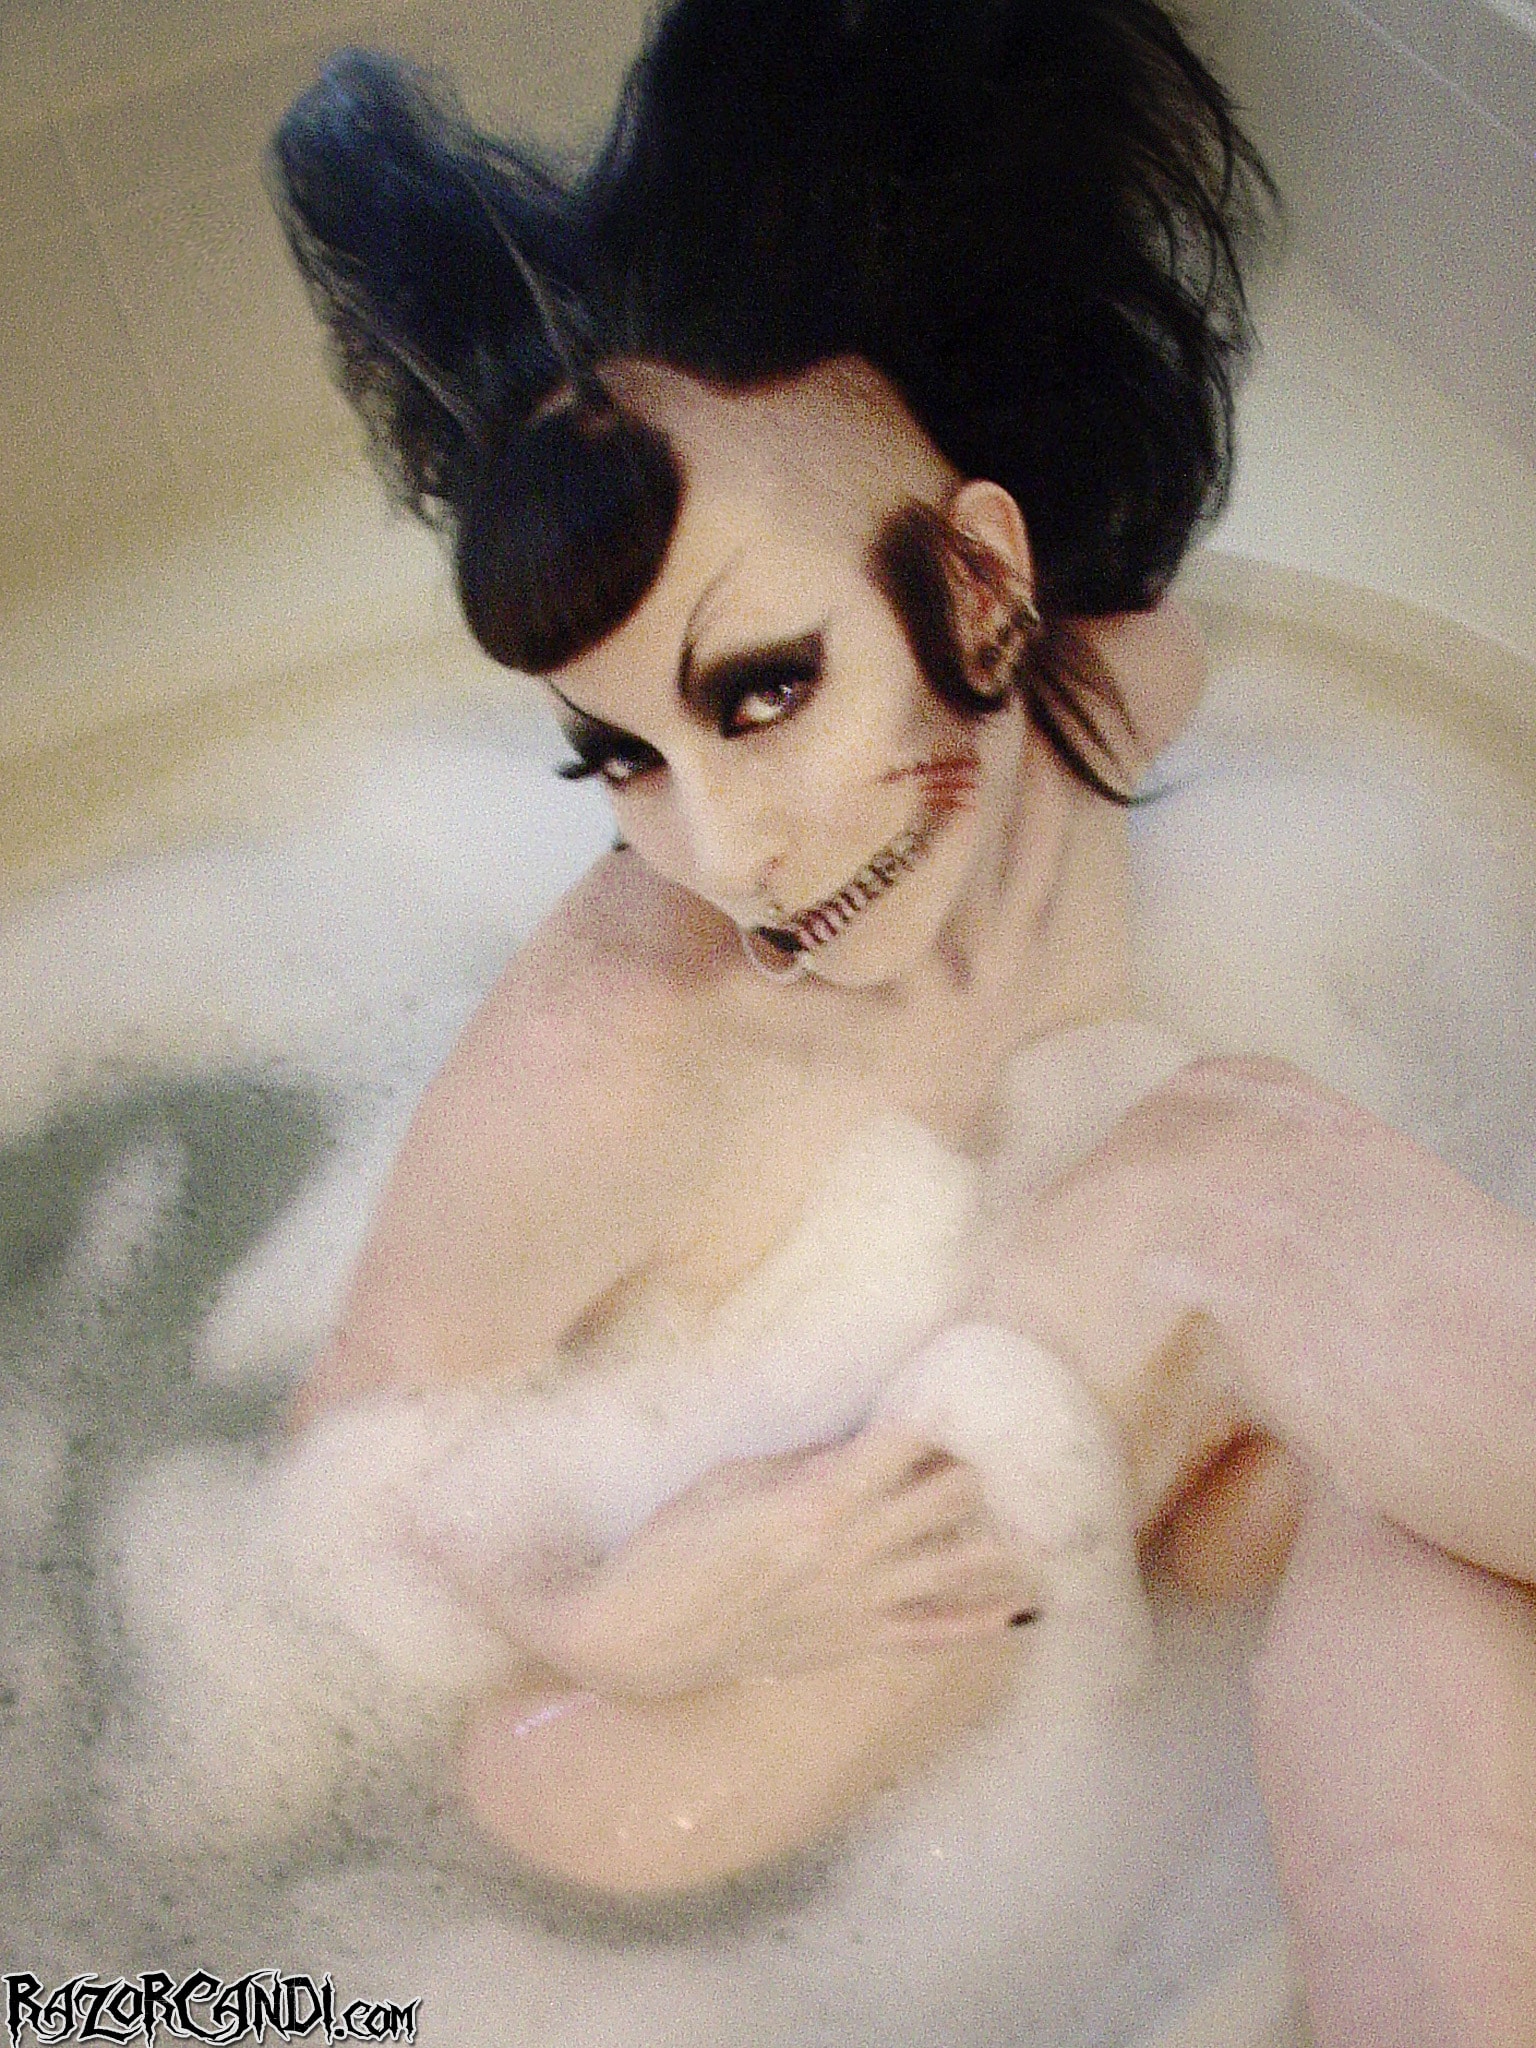 Razor Candi 'Classic Gothic Deathrock Beauty in Bubble Bath' starring Razor Candi (Photo 11)